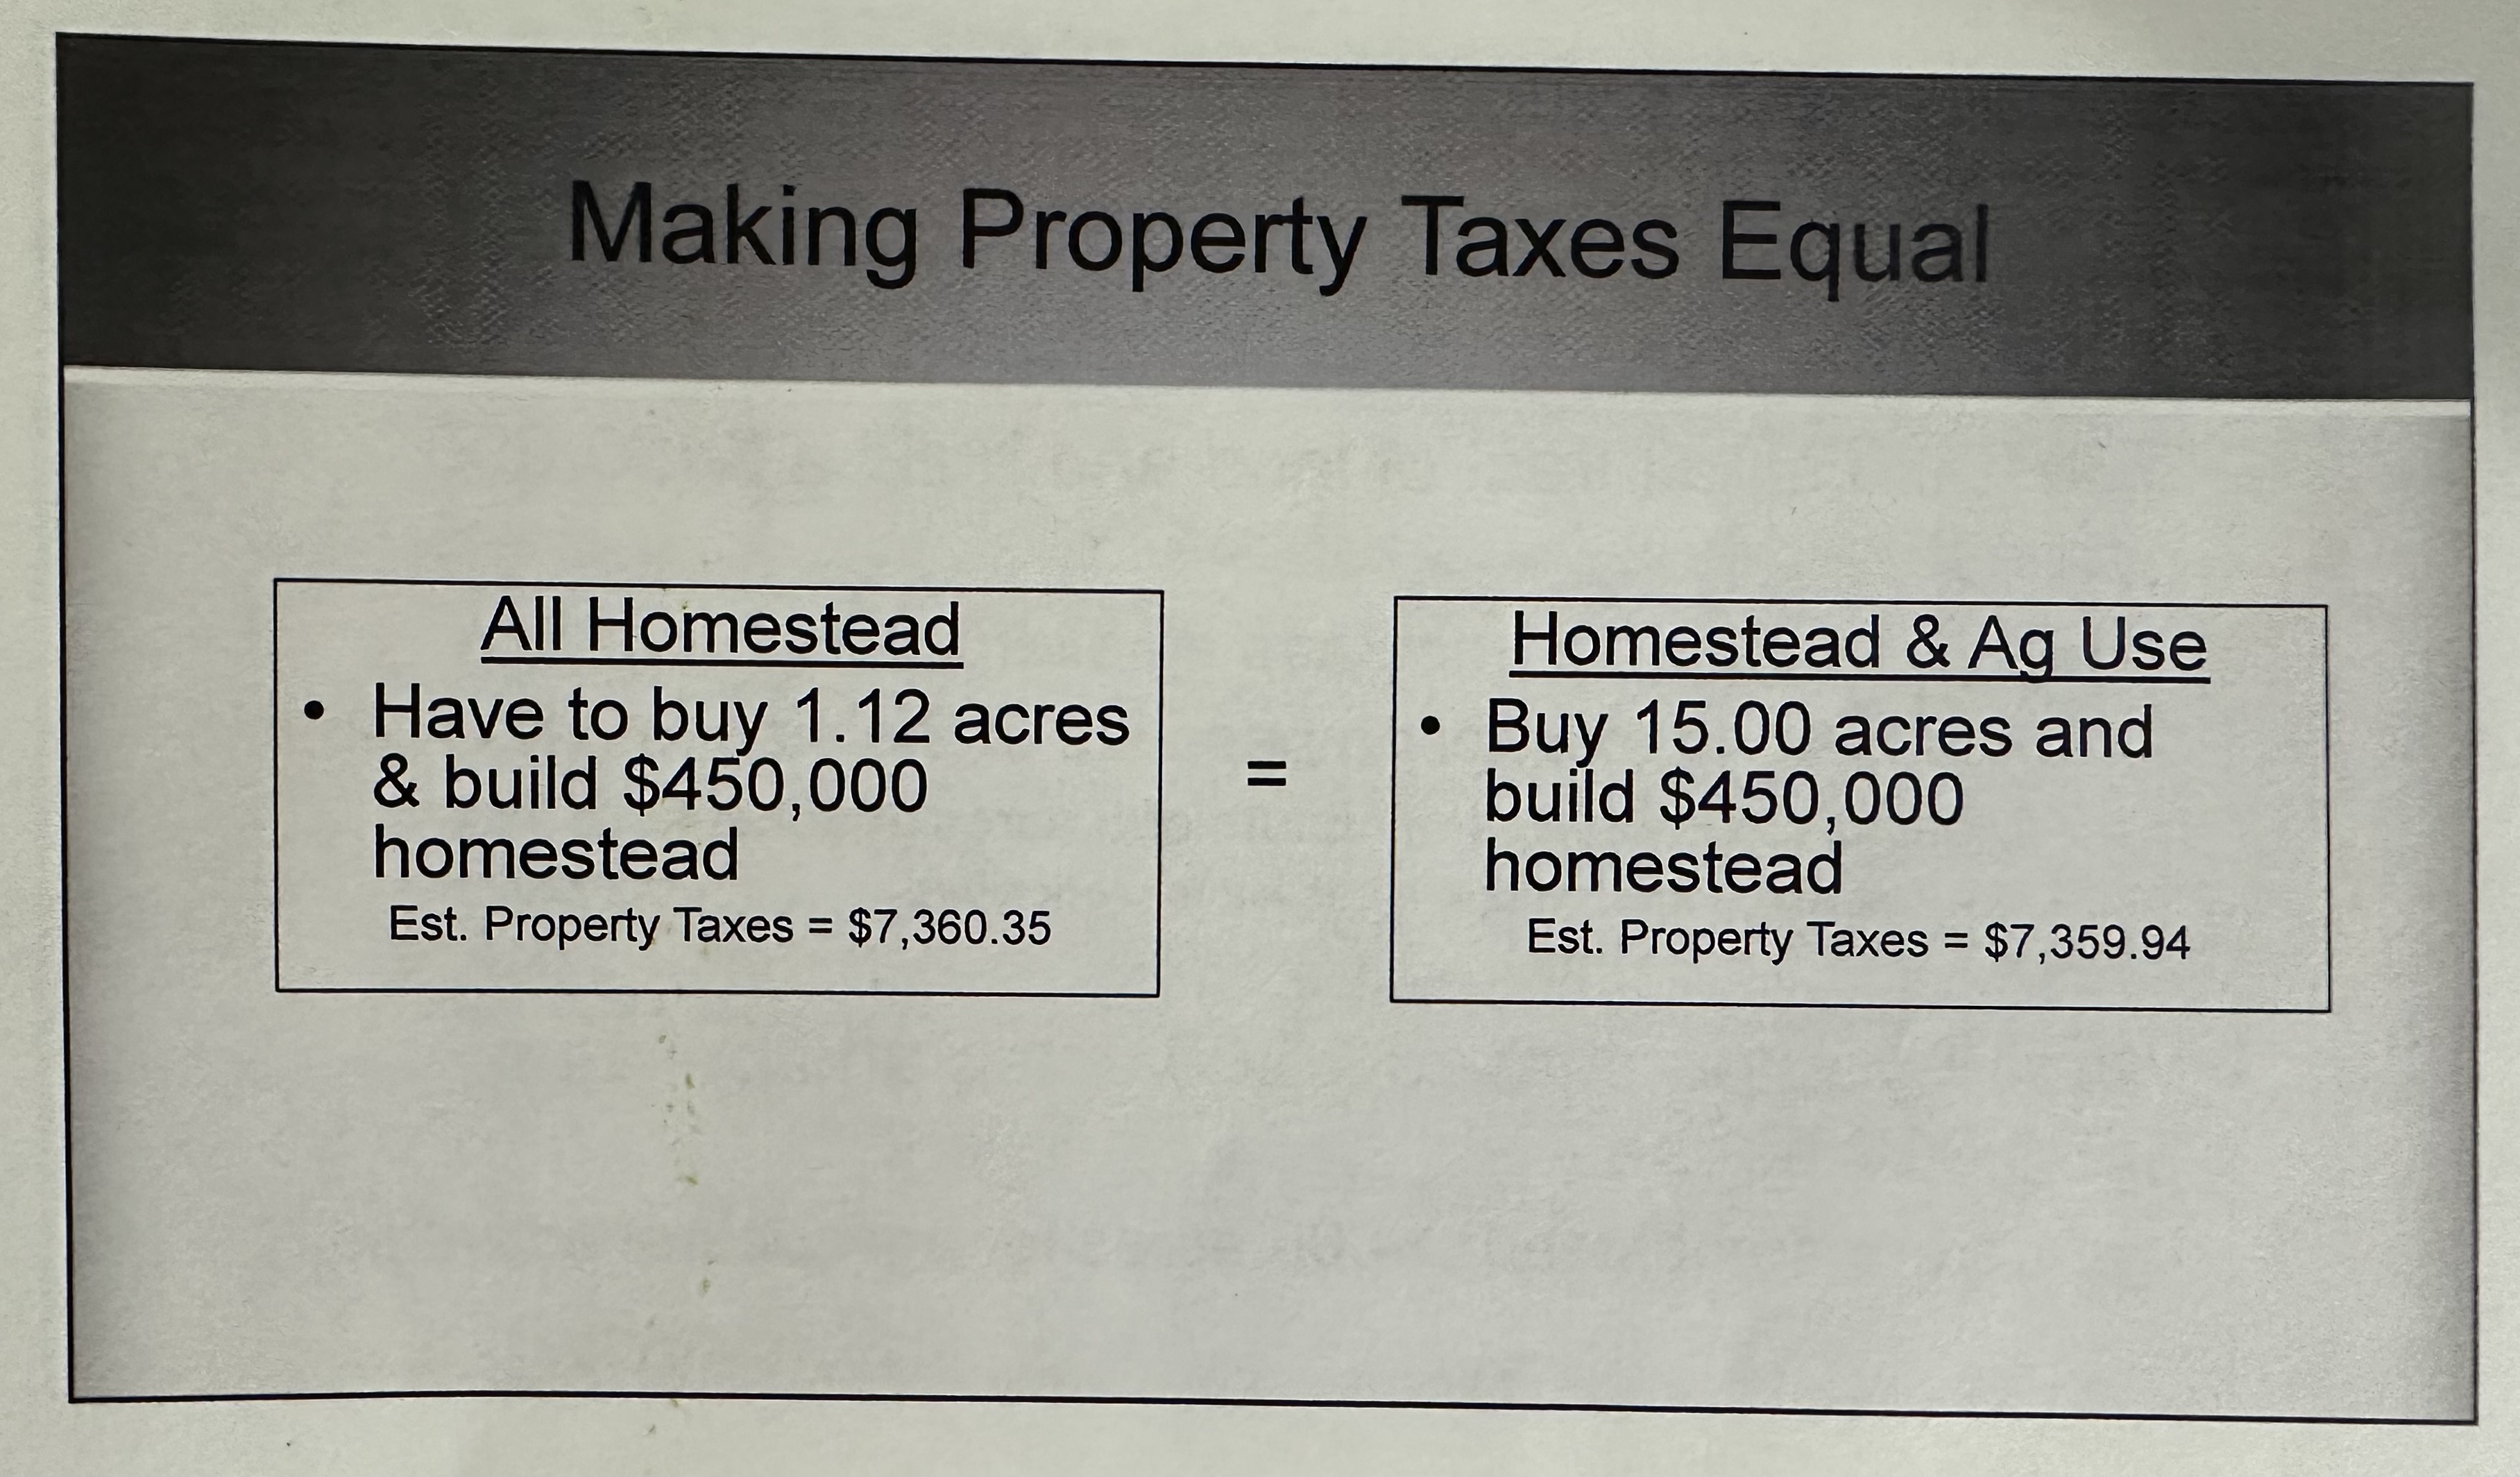 Homestead Plus AG Use Land Tax Comparison